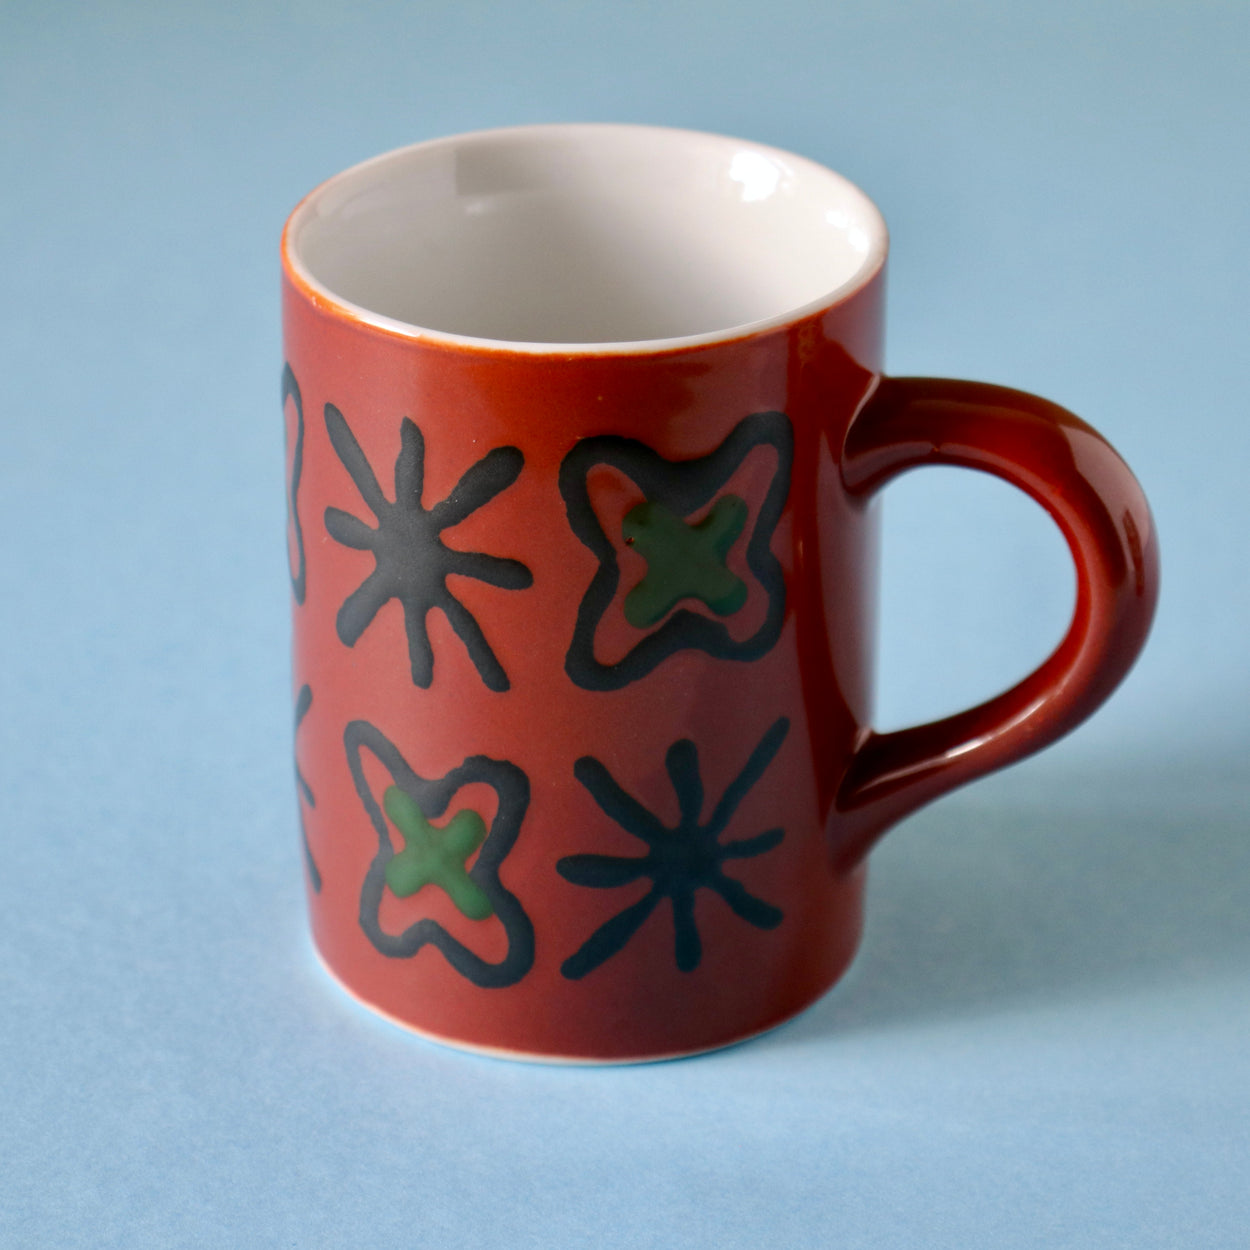 Vintage ceramic cup close up